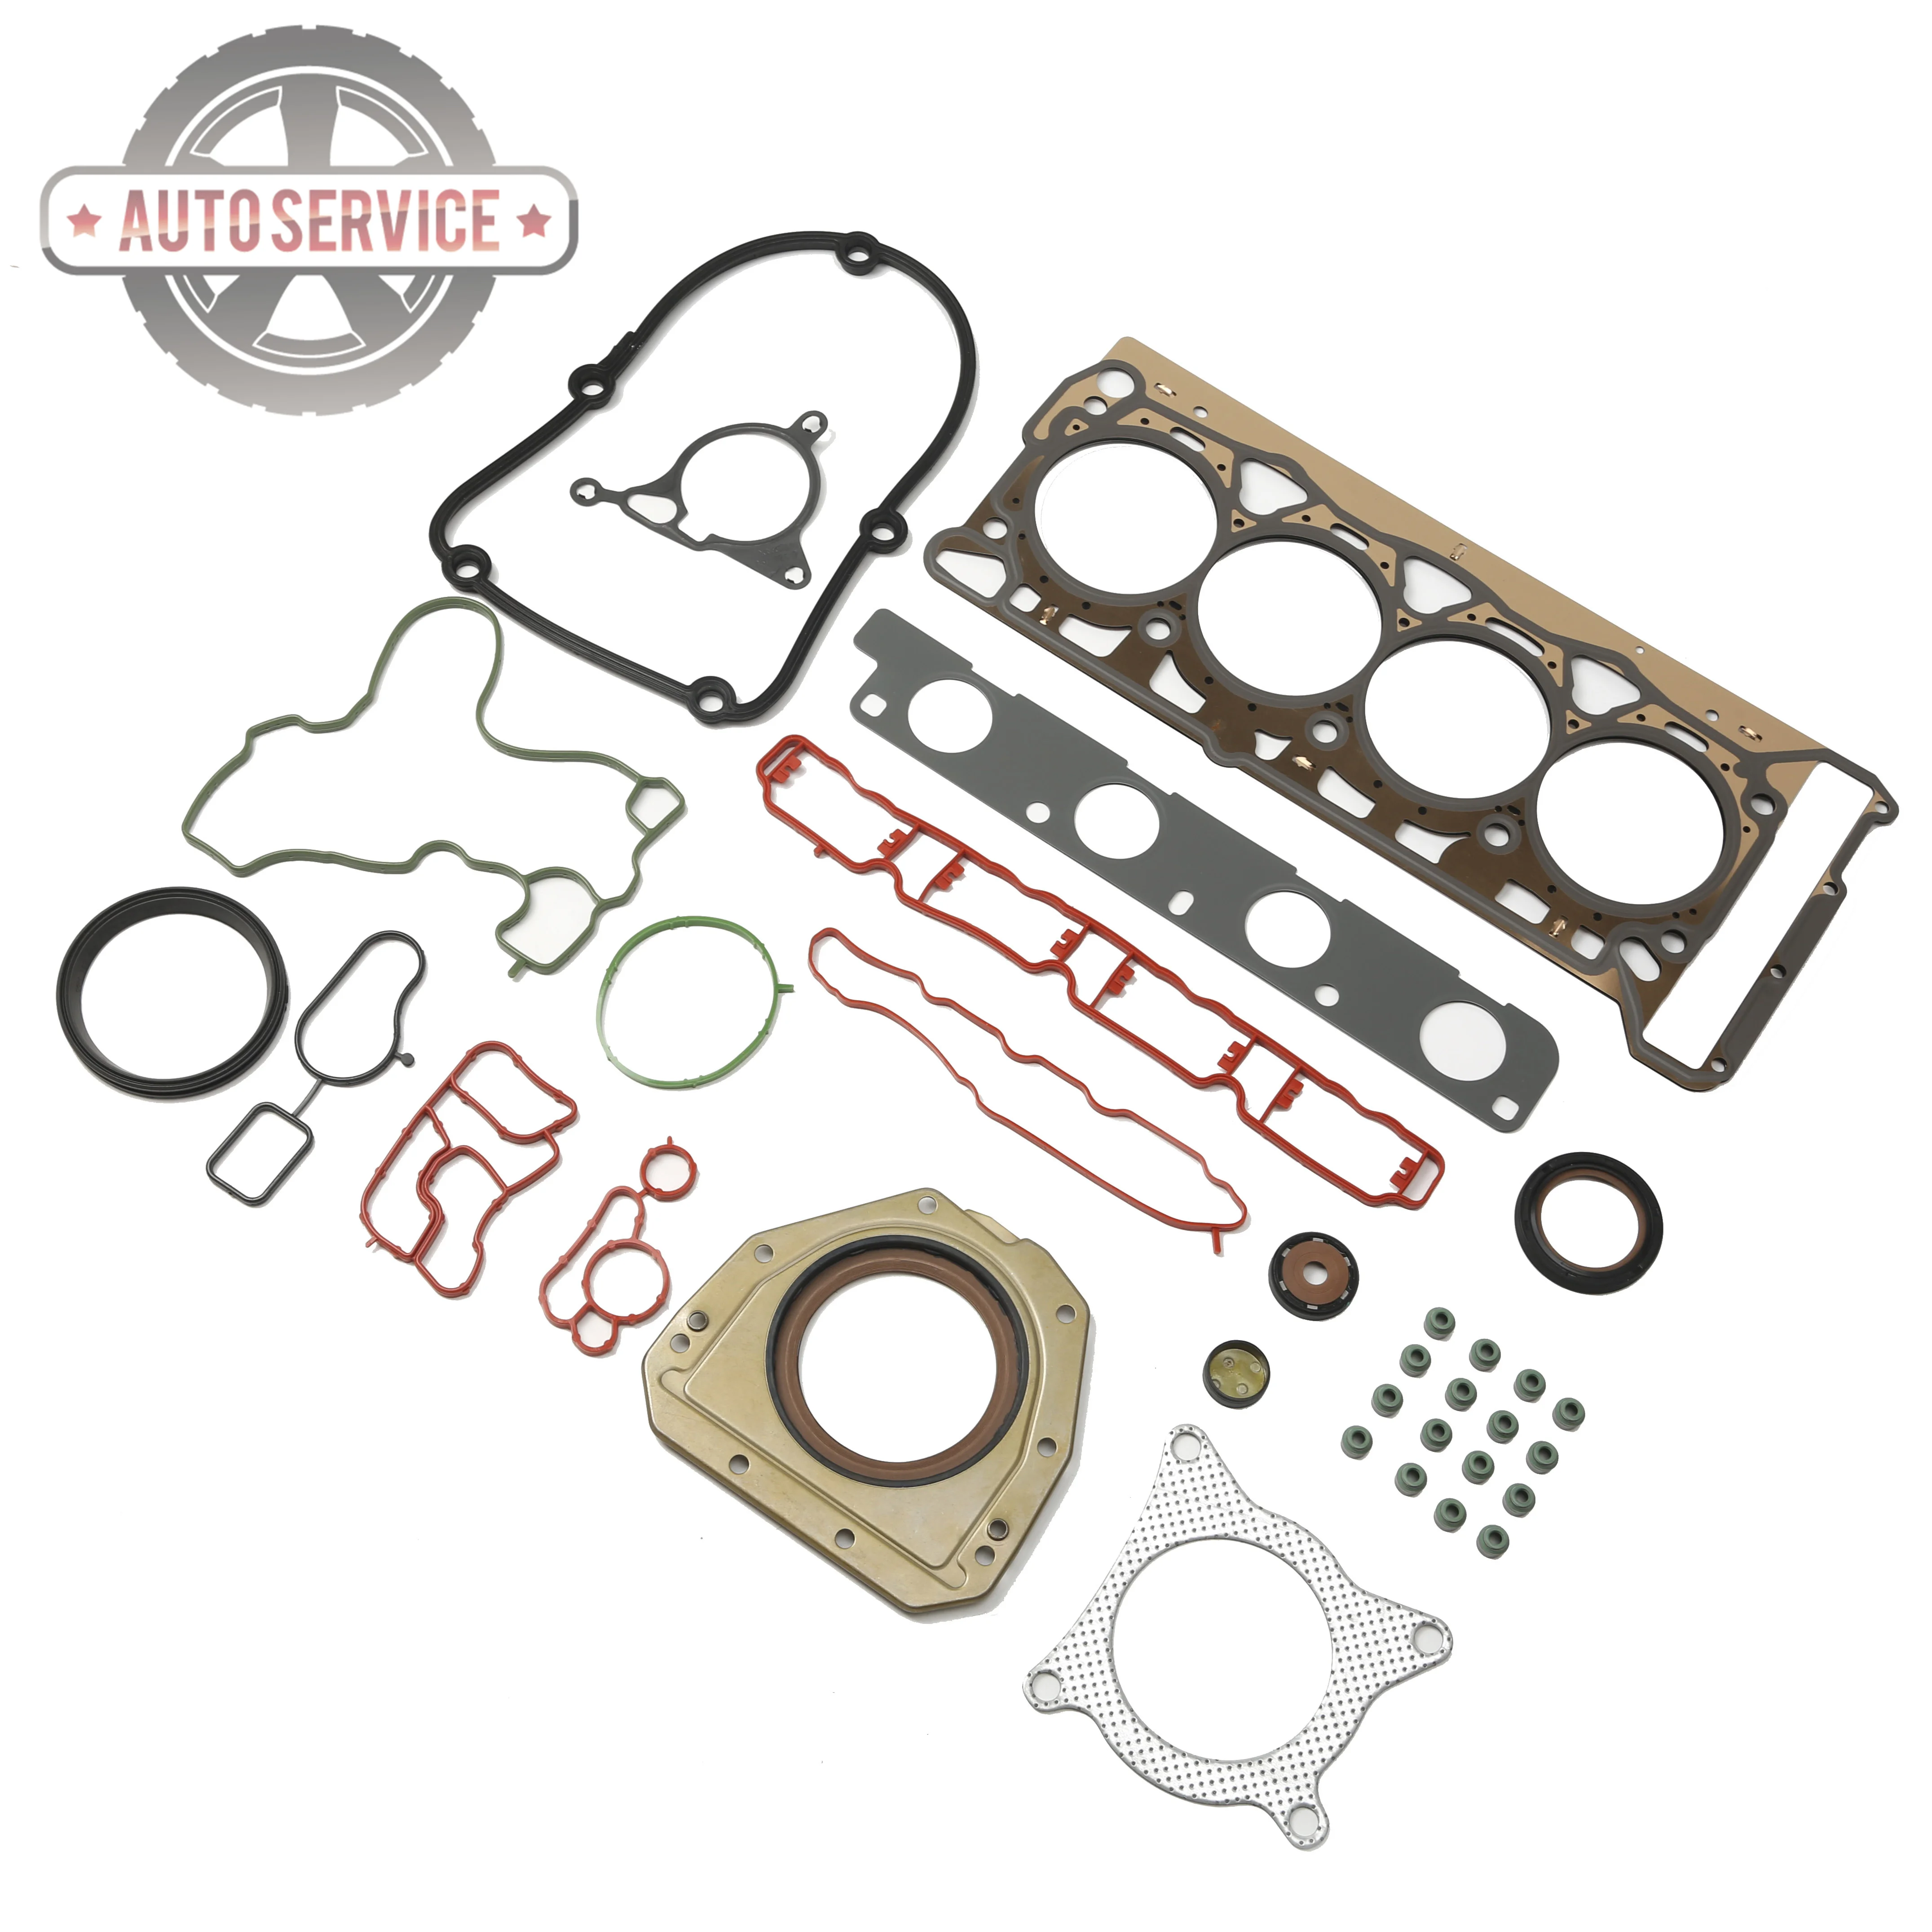 NEW 06J 103 383 D Engine Cylinder Head Gasket Oil Seal Repair Kit For VW Golf Passat Audi A4 A6 Q5 EA888 2.0TFSI 16V 06J103383D